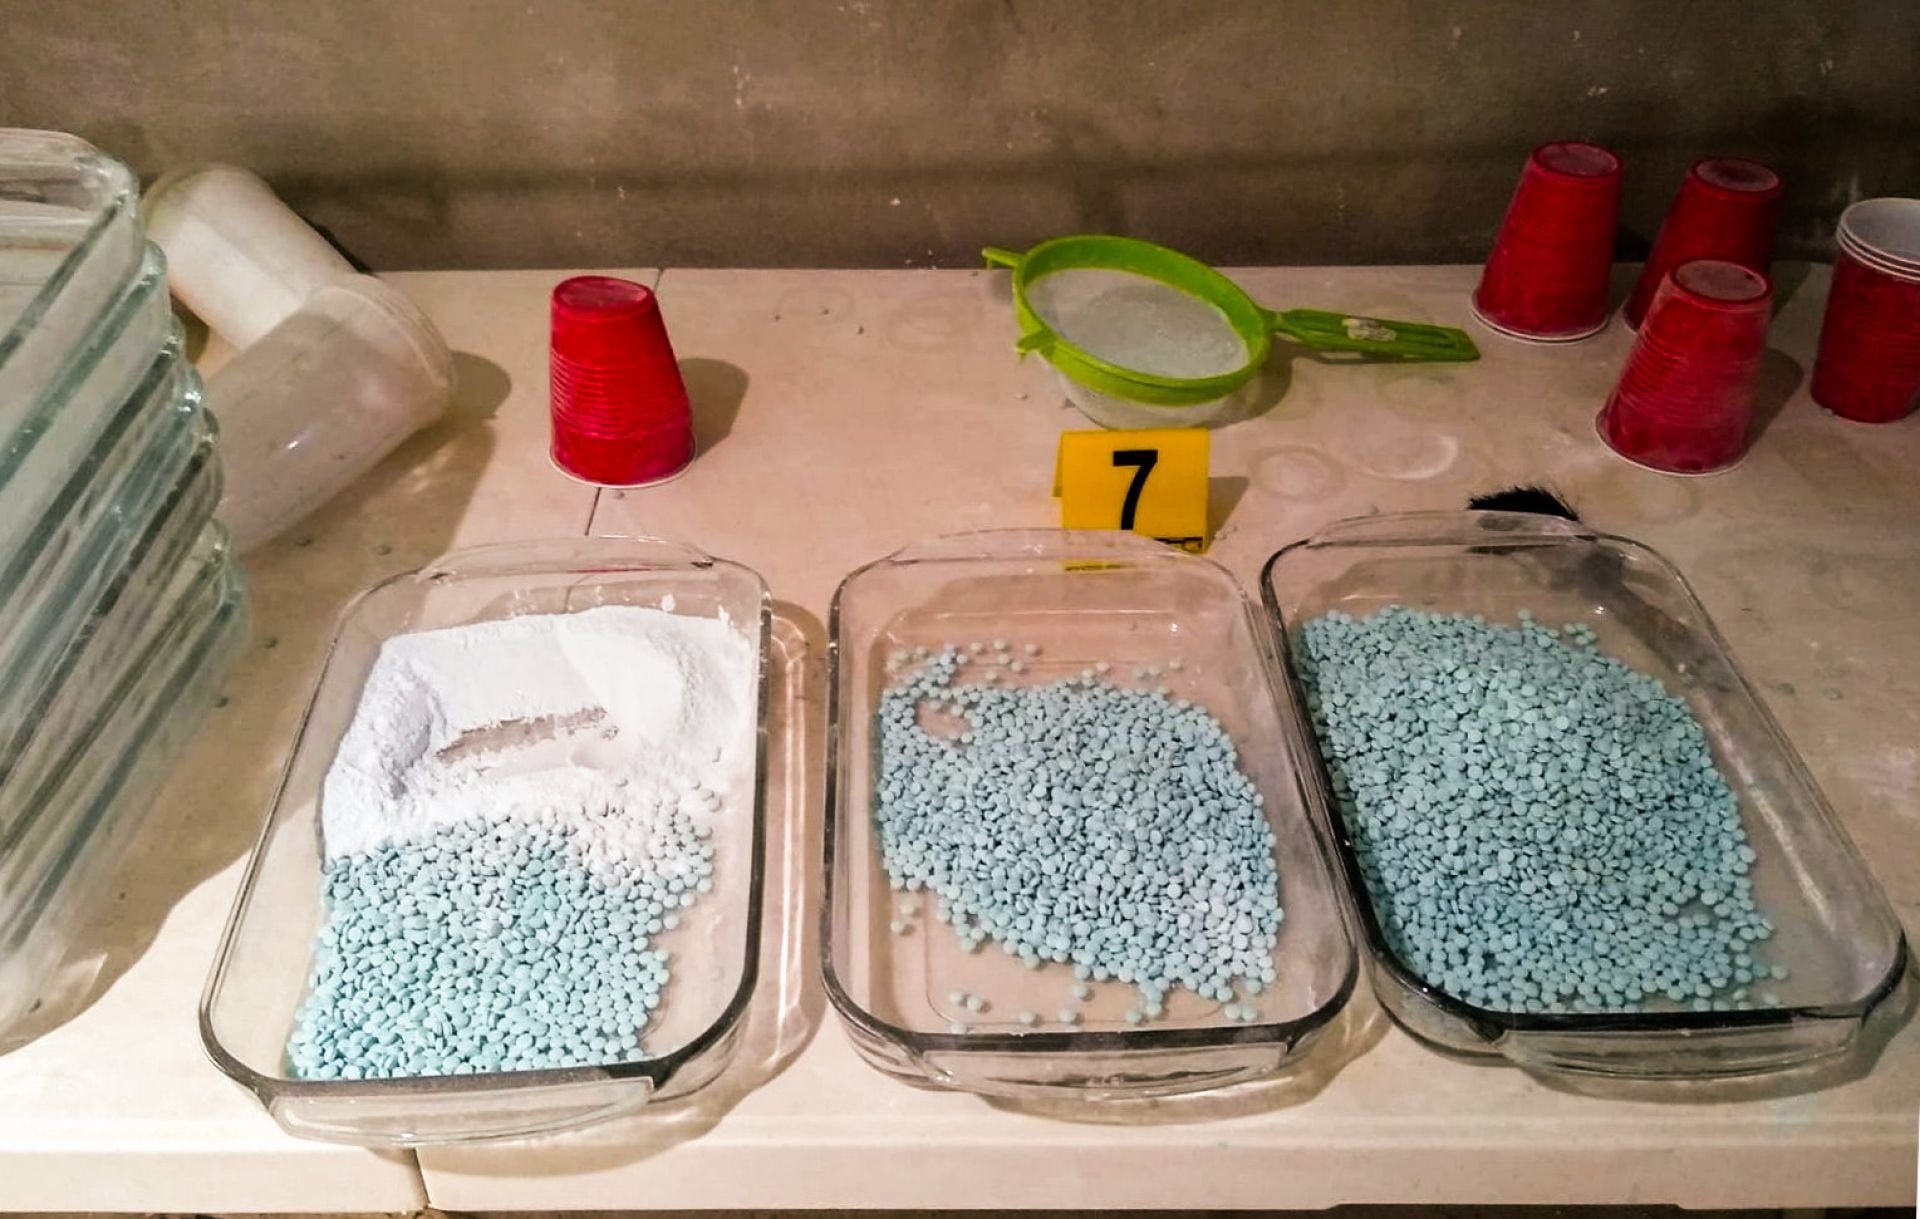 Les ‘agüitan’ la fiesta: Decomisan 100 toneladas de precursores del fentanilo en Sinaloa